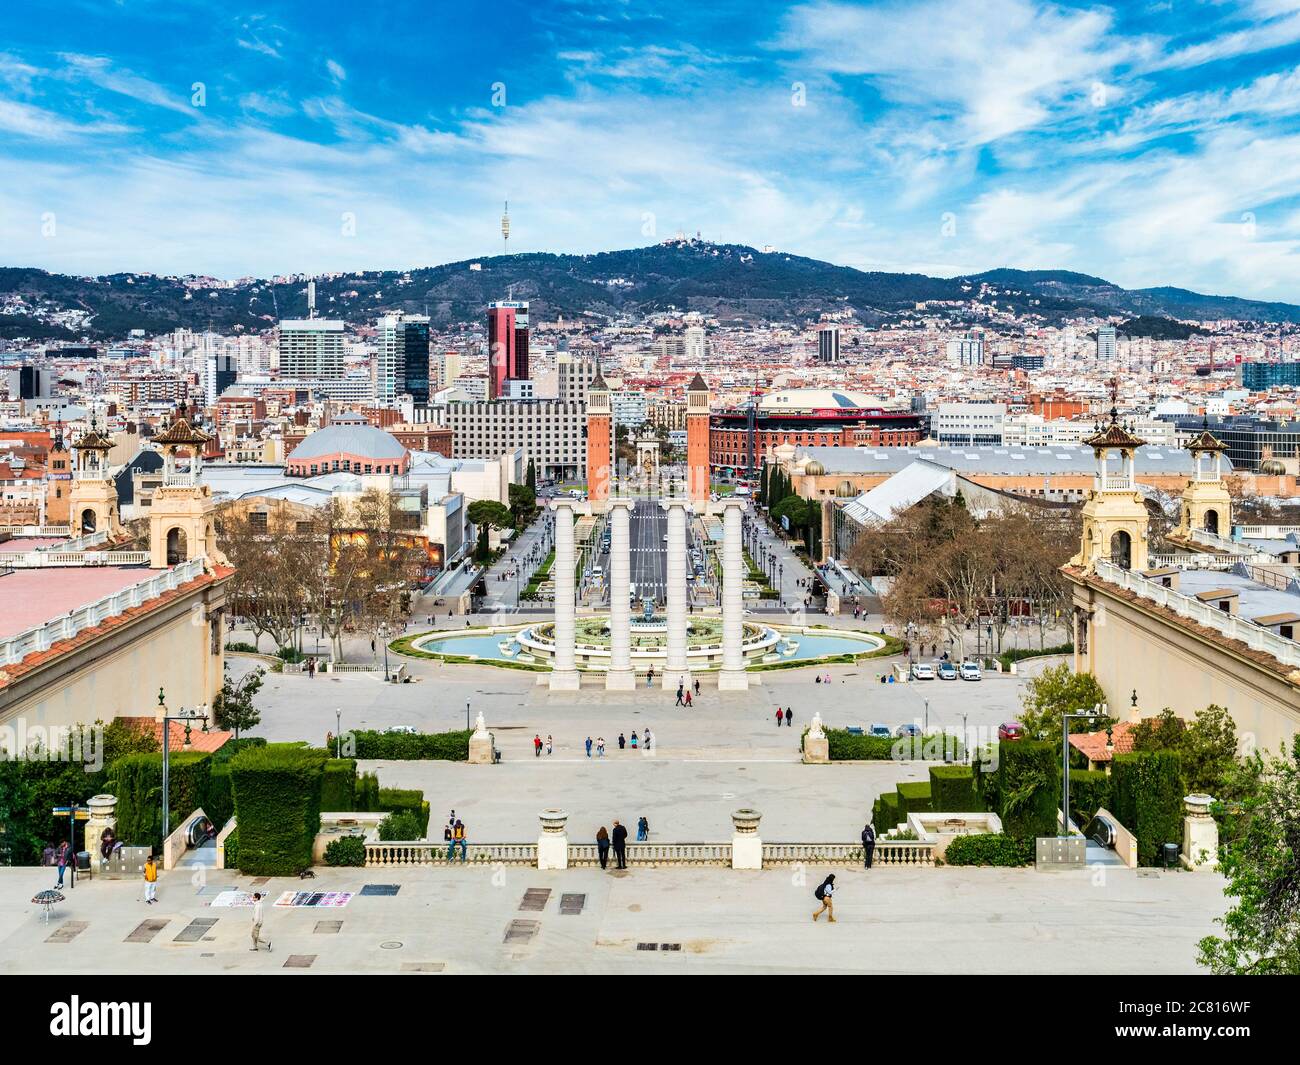 4 March 2020: Barcelona, Spain - View of Barcelona from the National Art Museum of Catalonia towards Plaça d'Espanya. Stock Photo